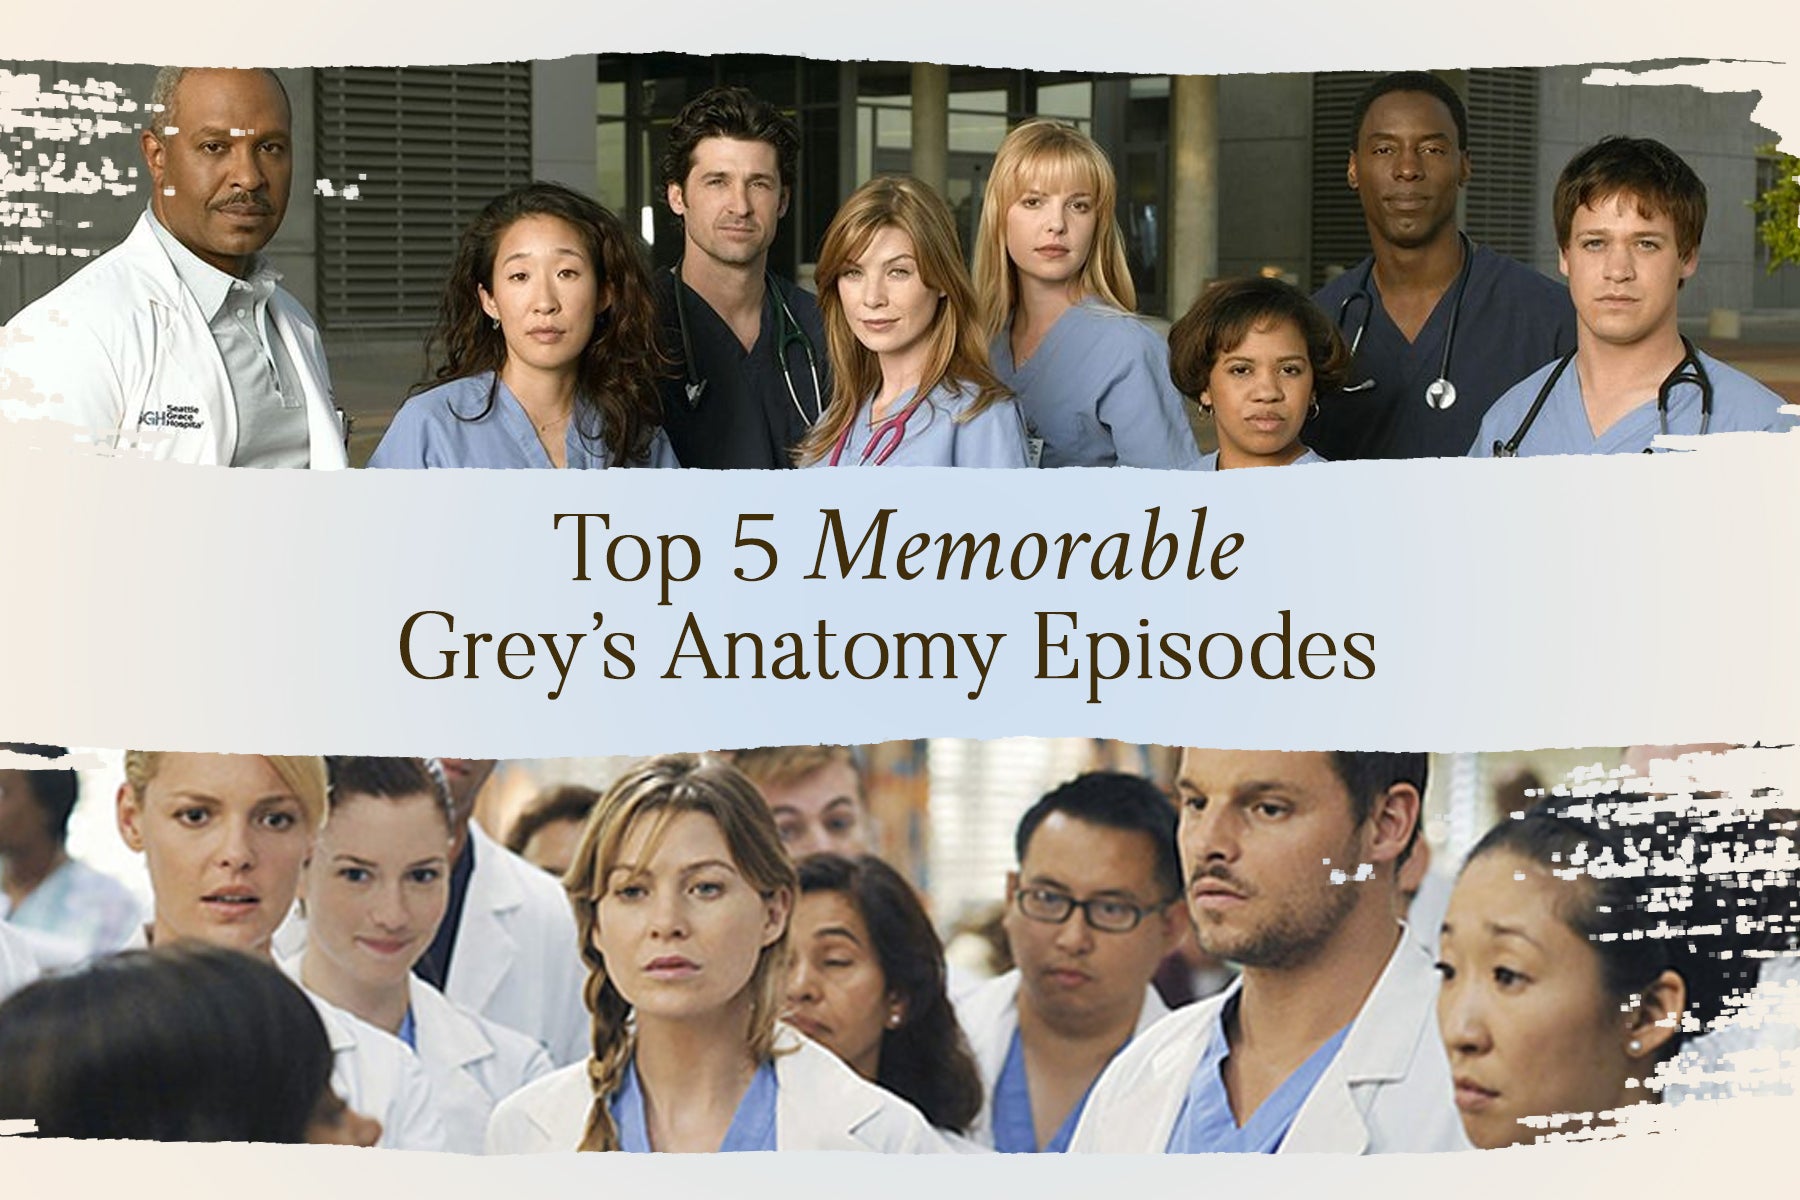 Top 5 Memorable Grey's Anatomy Episode (Seasons 1-5)